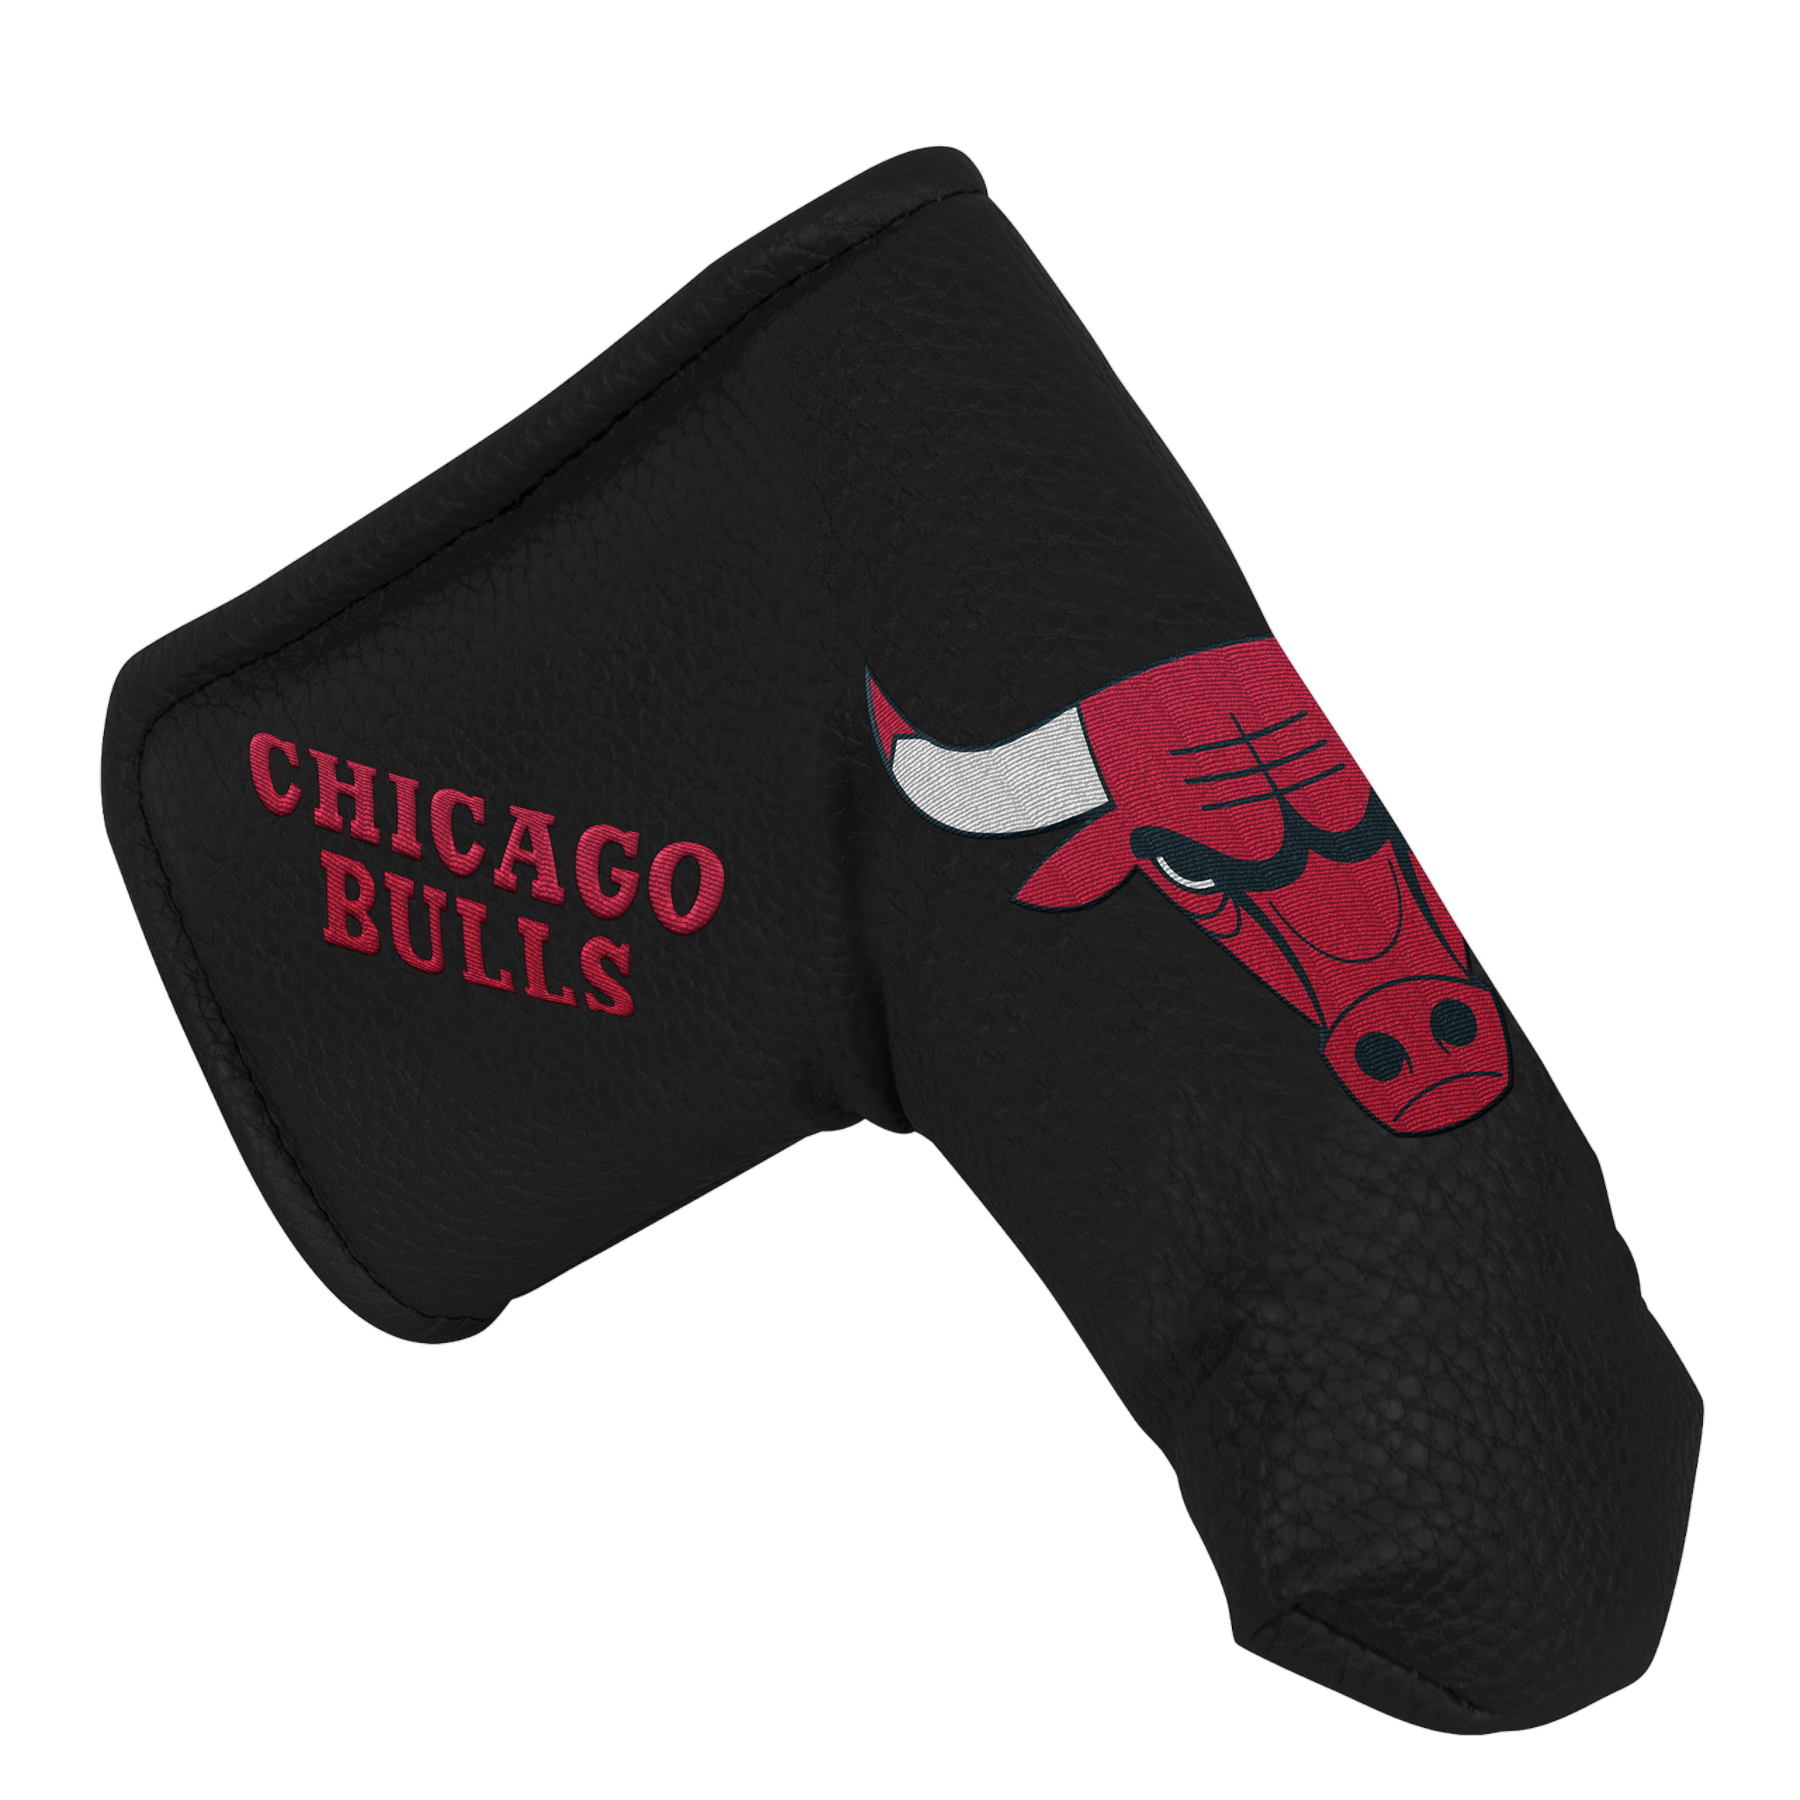 Chicago Bulls Blade Putter Cover